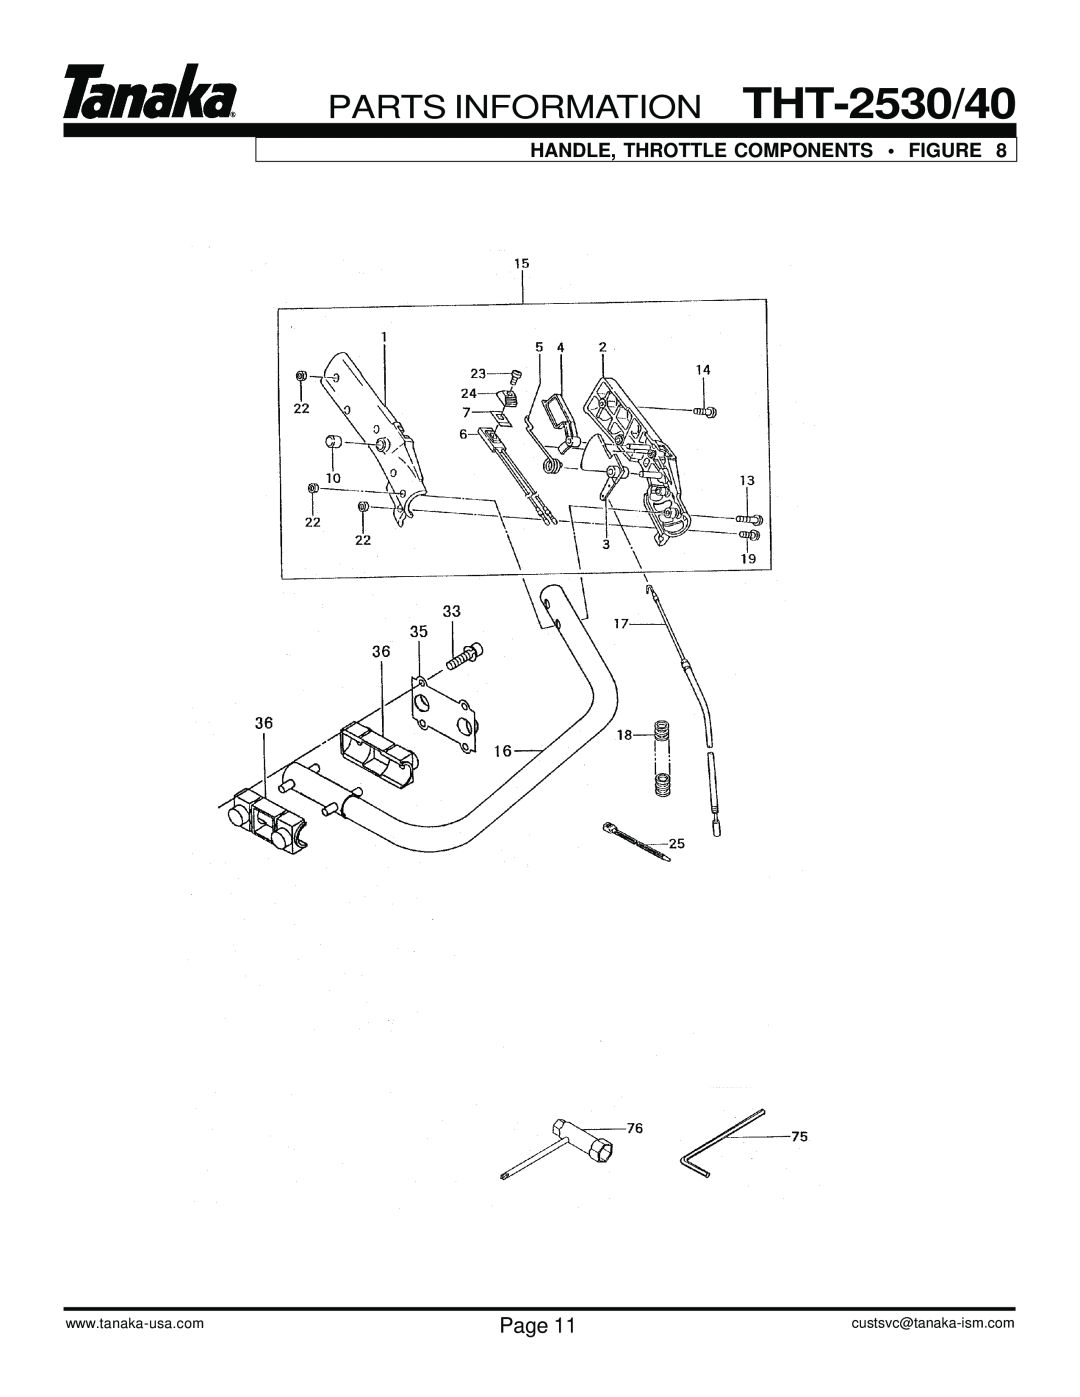 Tanaka THT-2540/2530 manual PARTS INFORMATION THT-2530/40, Handle, Throttle Components Figure, custsvc@tanaka-ism.com 